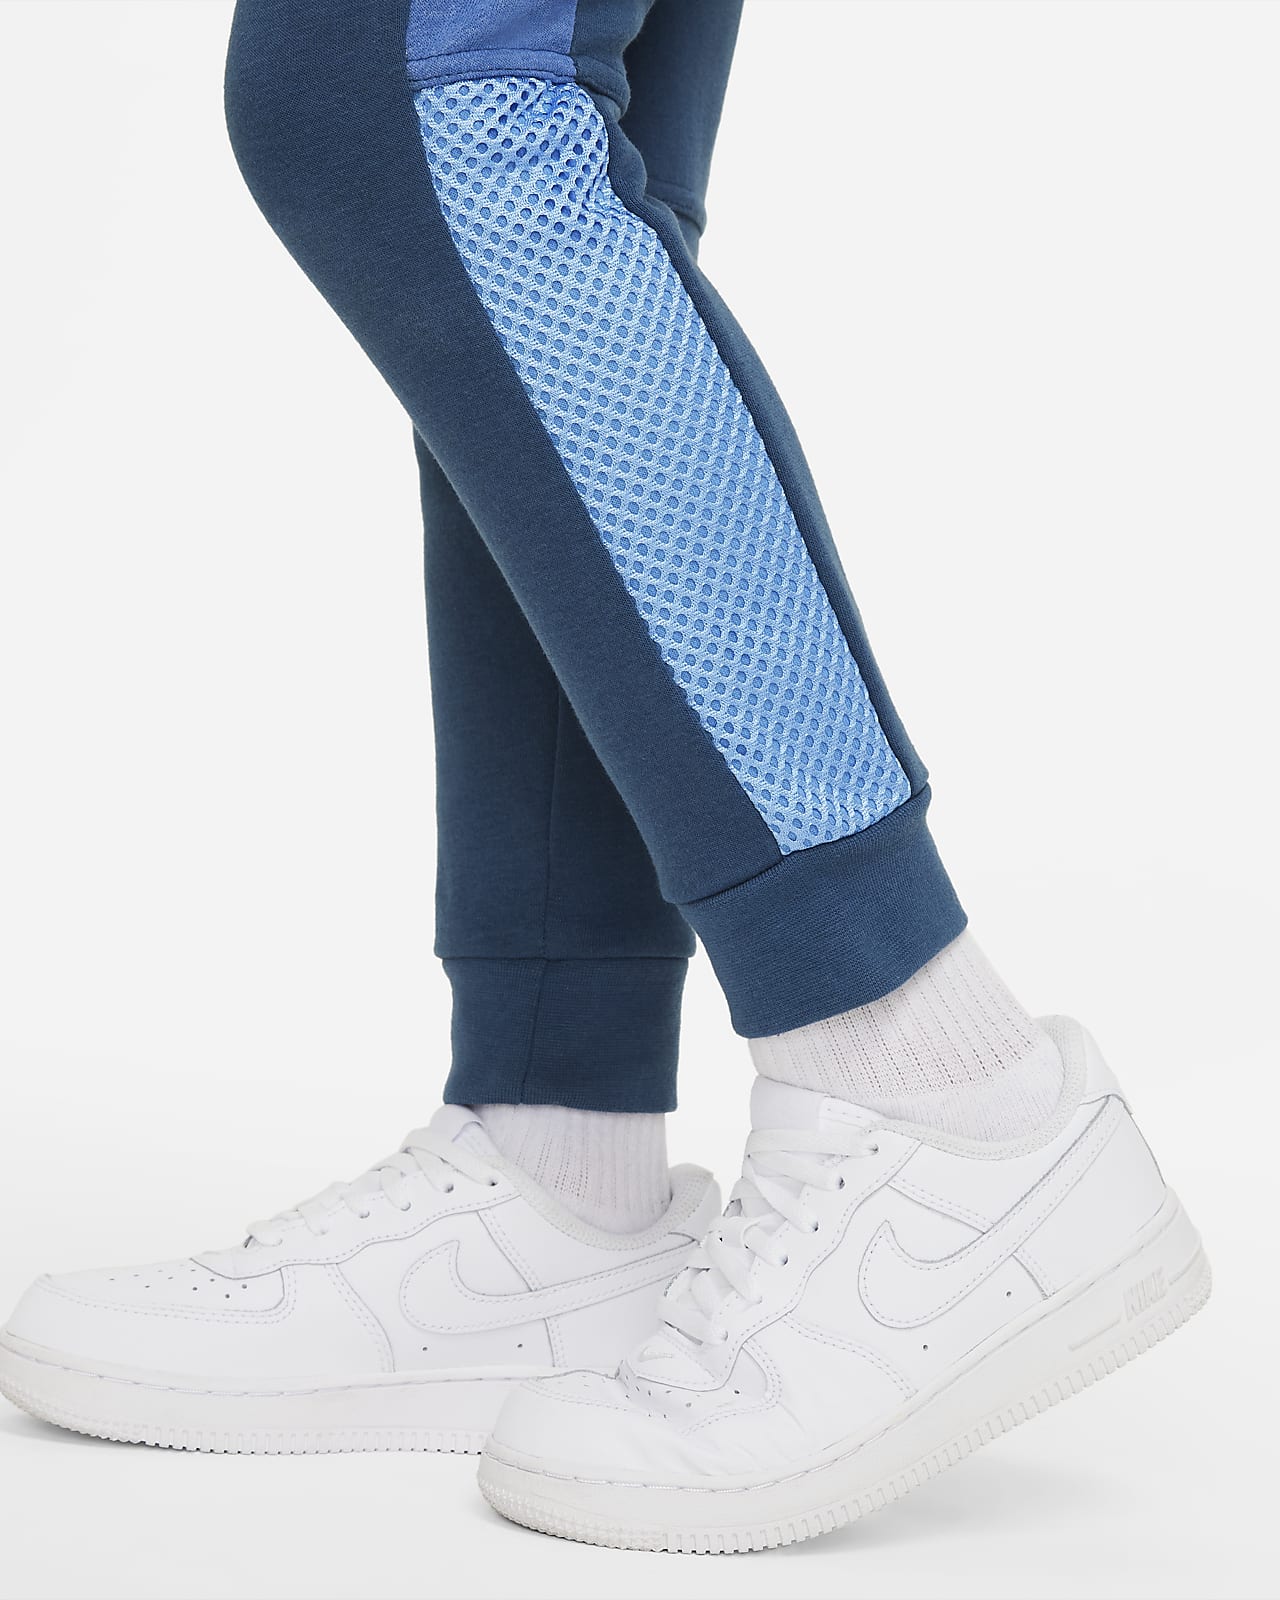 Completo pantaloni e felpa con cappuccio Nike Sportswear - Bambini القوس والعذراء